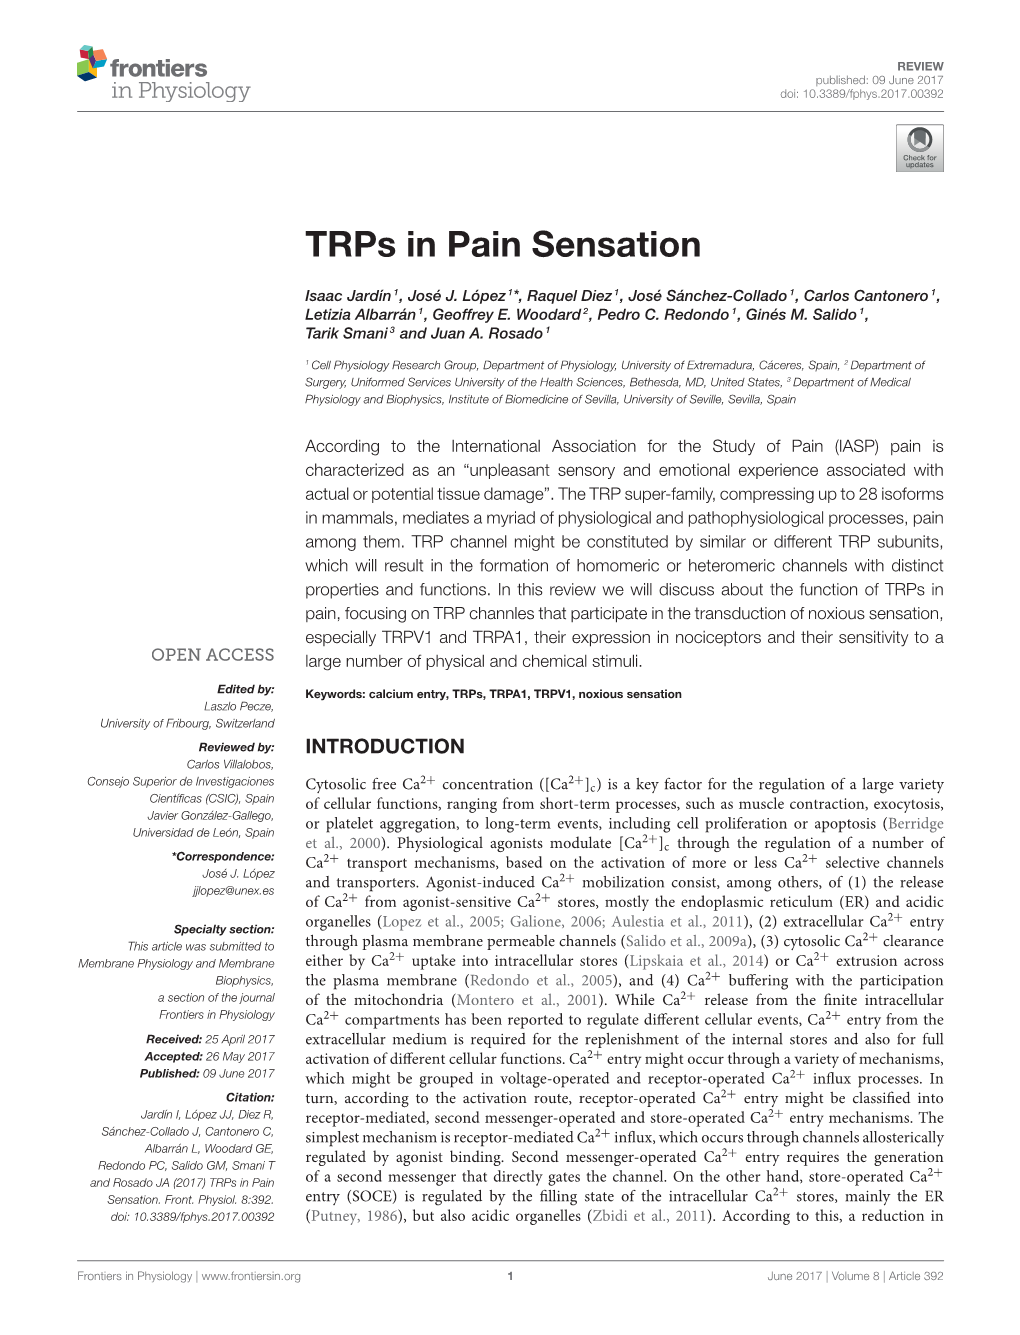 Trps in Pain Sensation